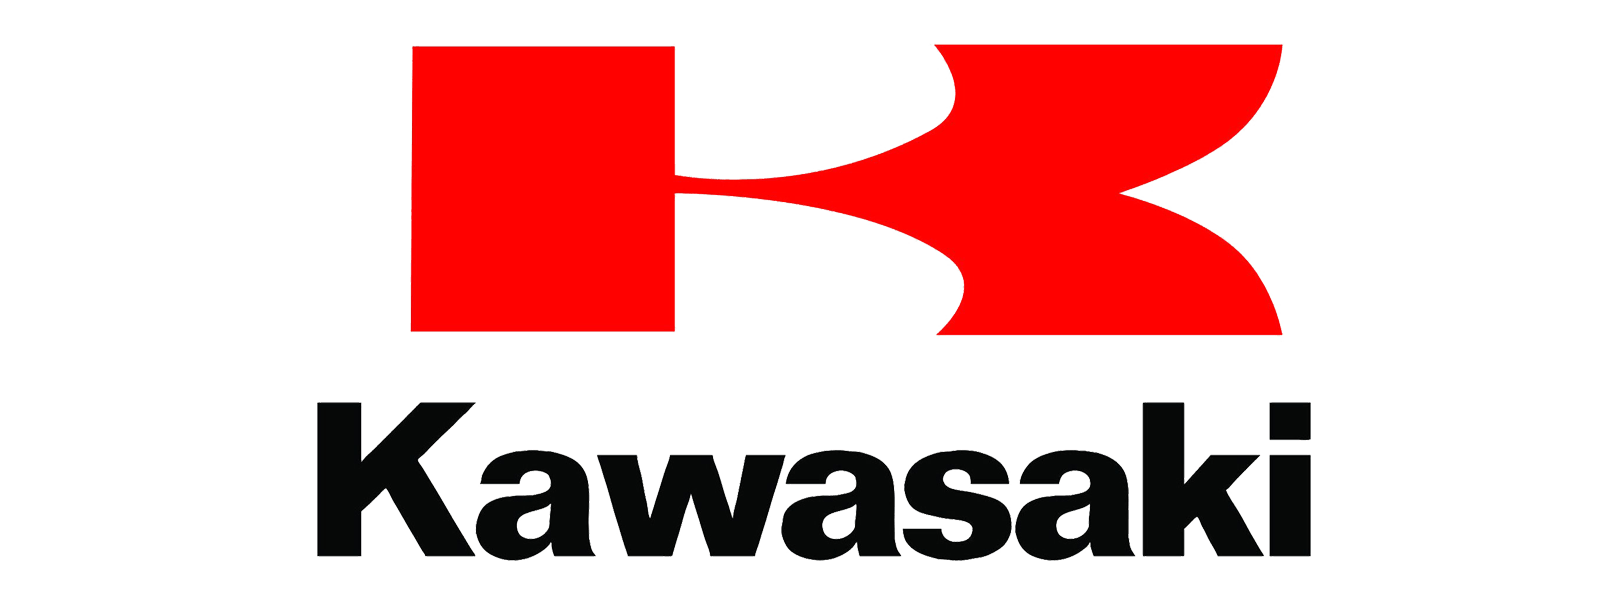 Kawasaki Logo - Kawasaki logo. Motorcycle brands: logo, specs, history